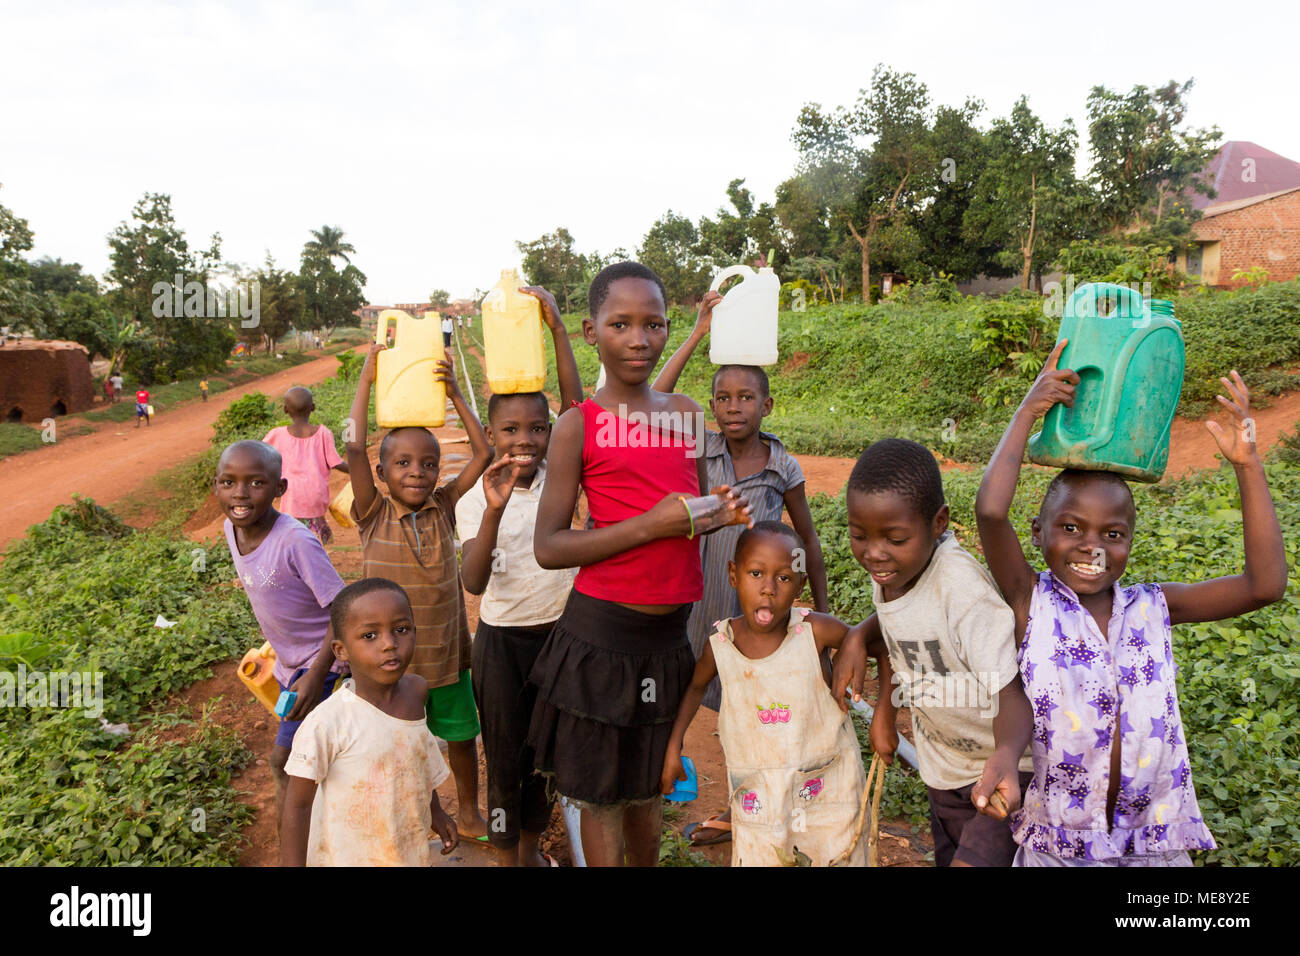 Lugazi, Uganda. 17 May 2017. Smiling Ugandan children running on a railway track in a rural area in Uganda. Stock Photo